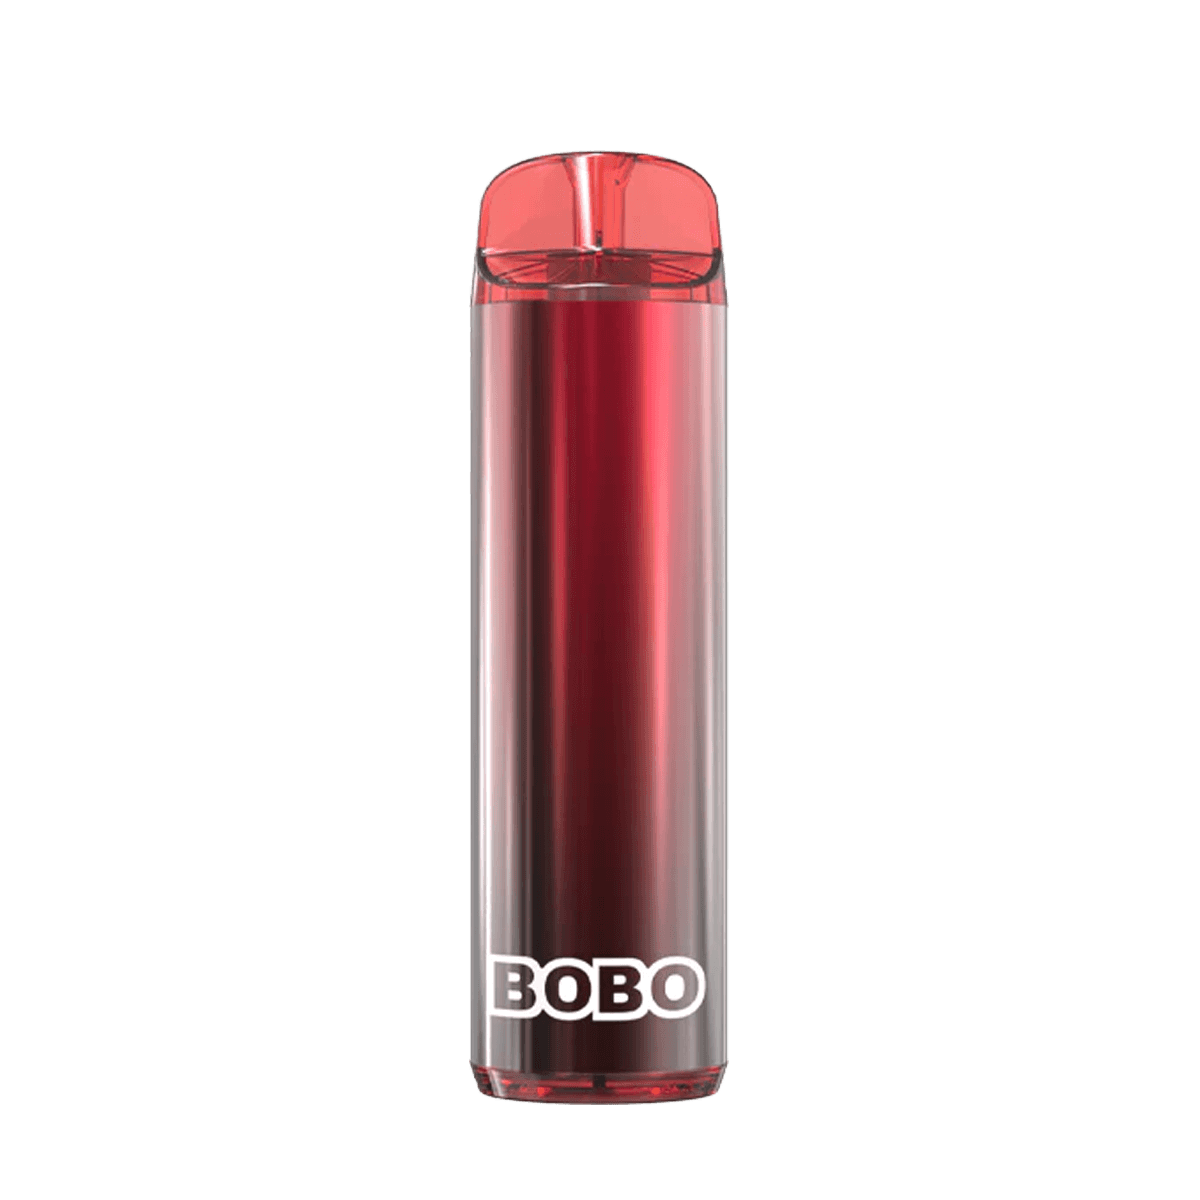 Vaporlax Bobo Disposable Vape Strawberry Glaze  